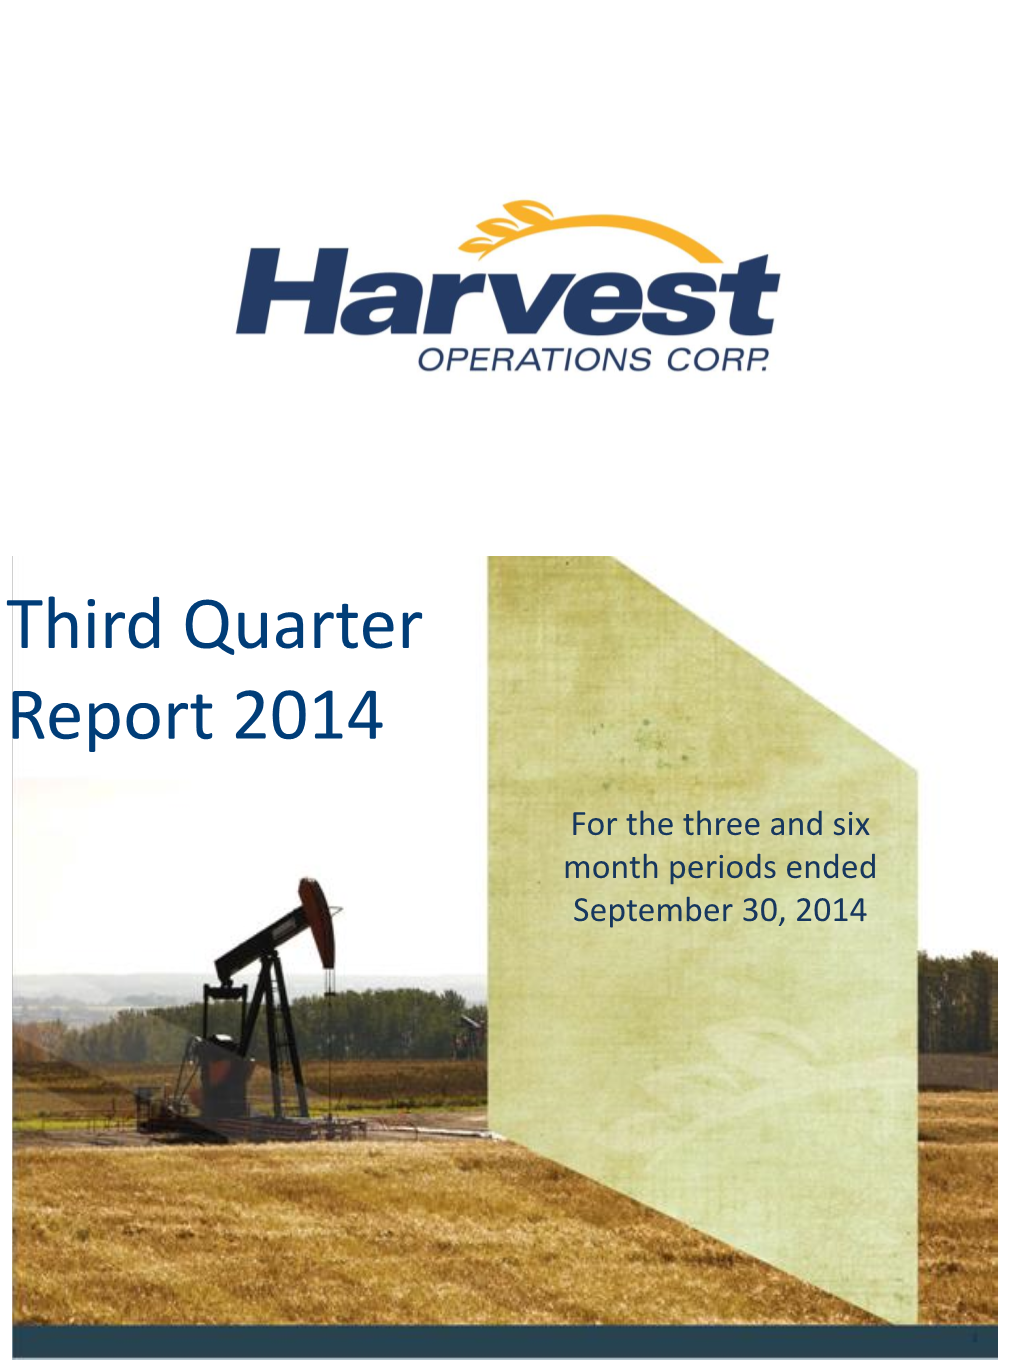 Third Quarter Report 2014